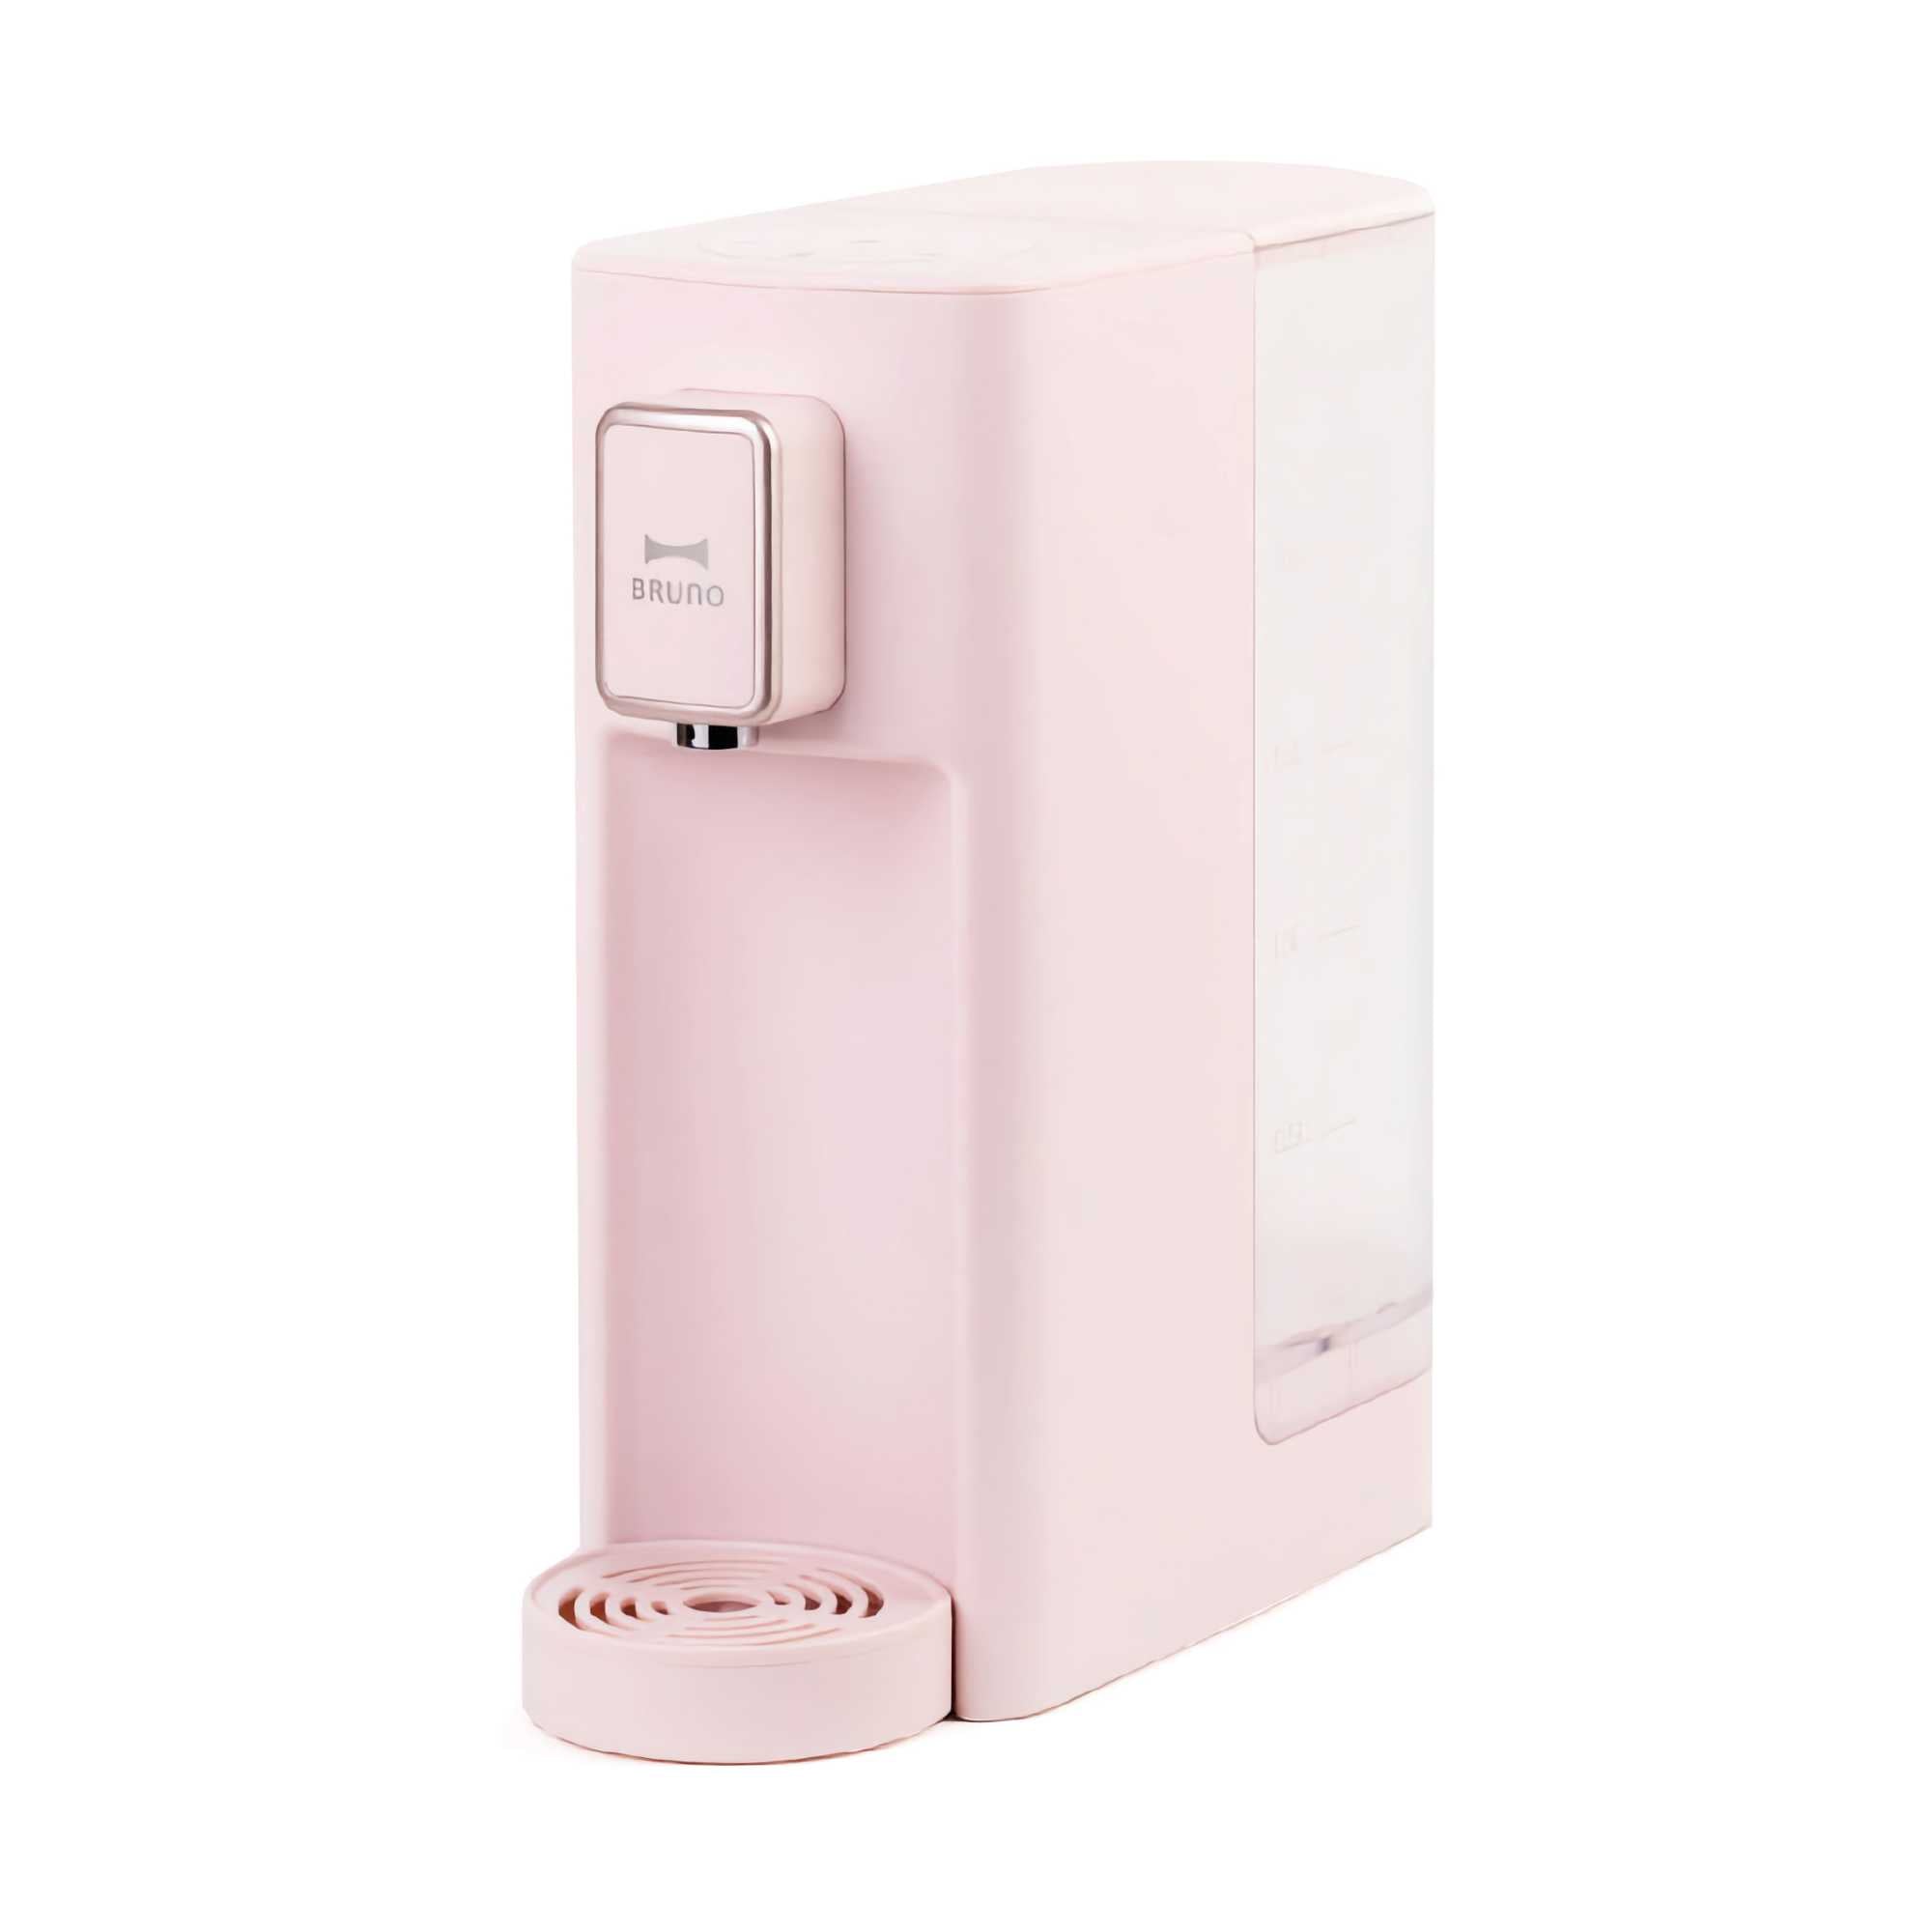 Bruno Instant Hot Water Dispenser, pink